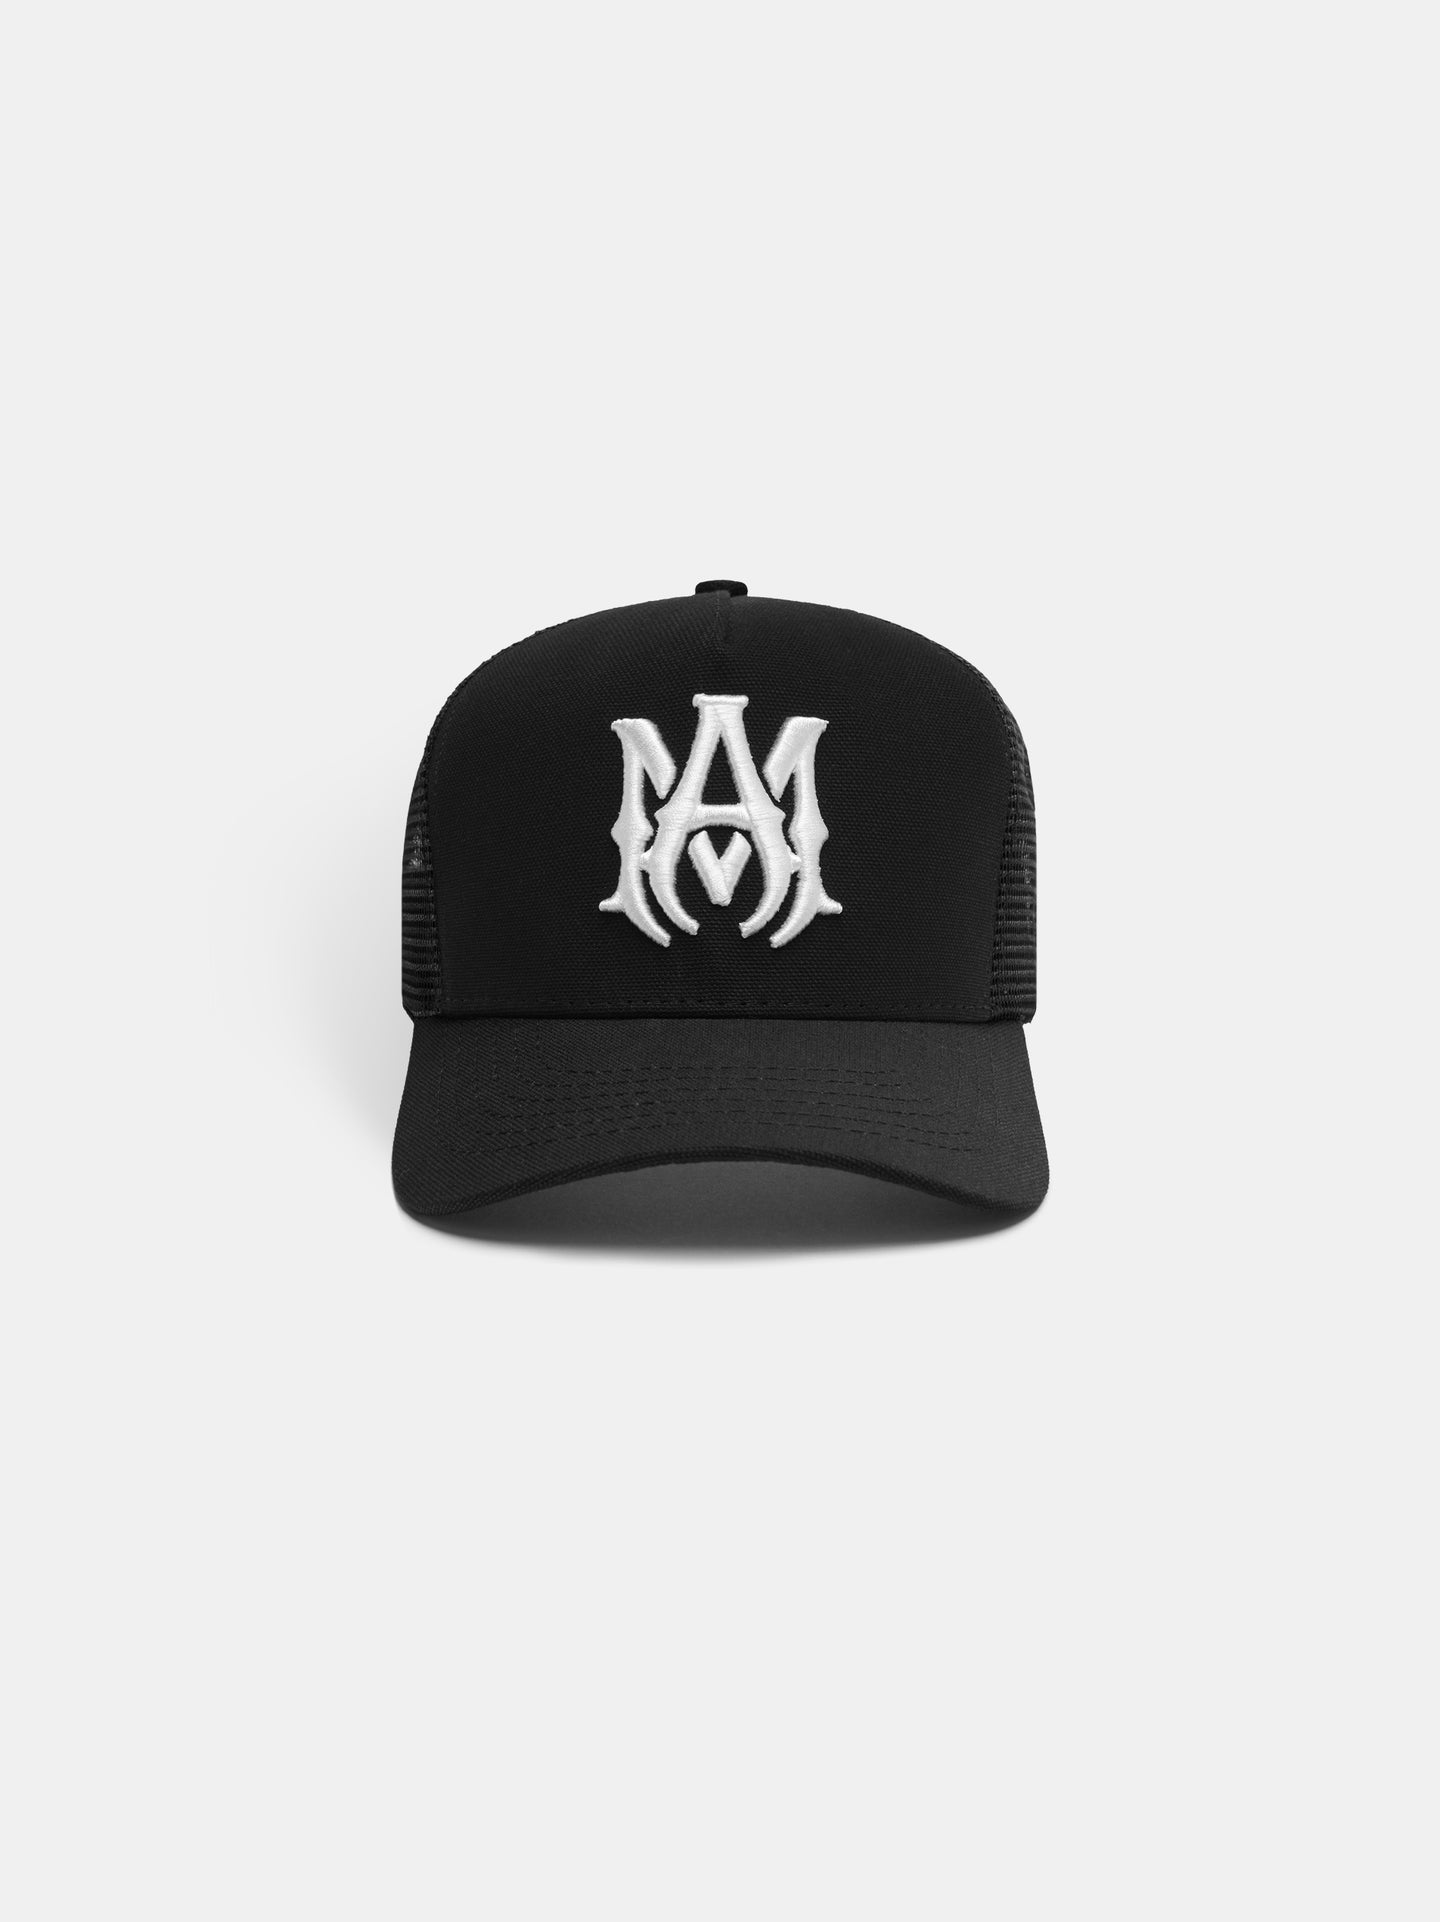 MA Logo Trucker Hat - Black/White